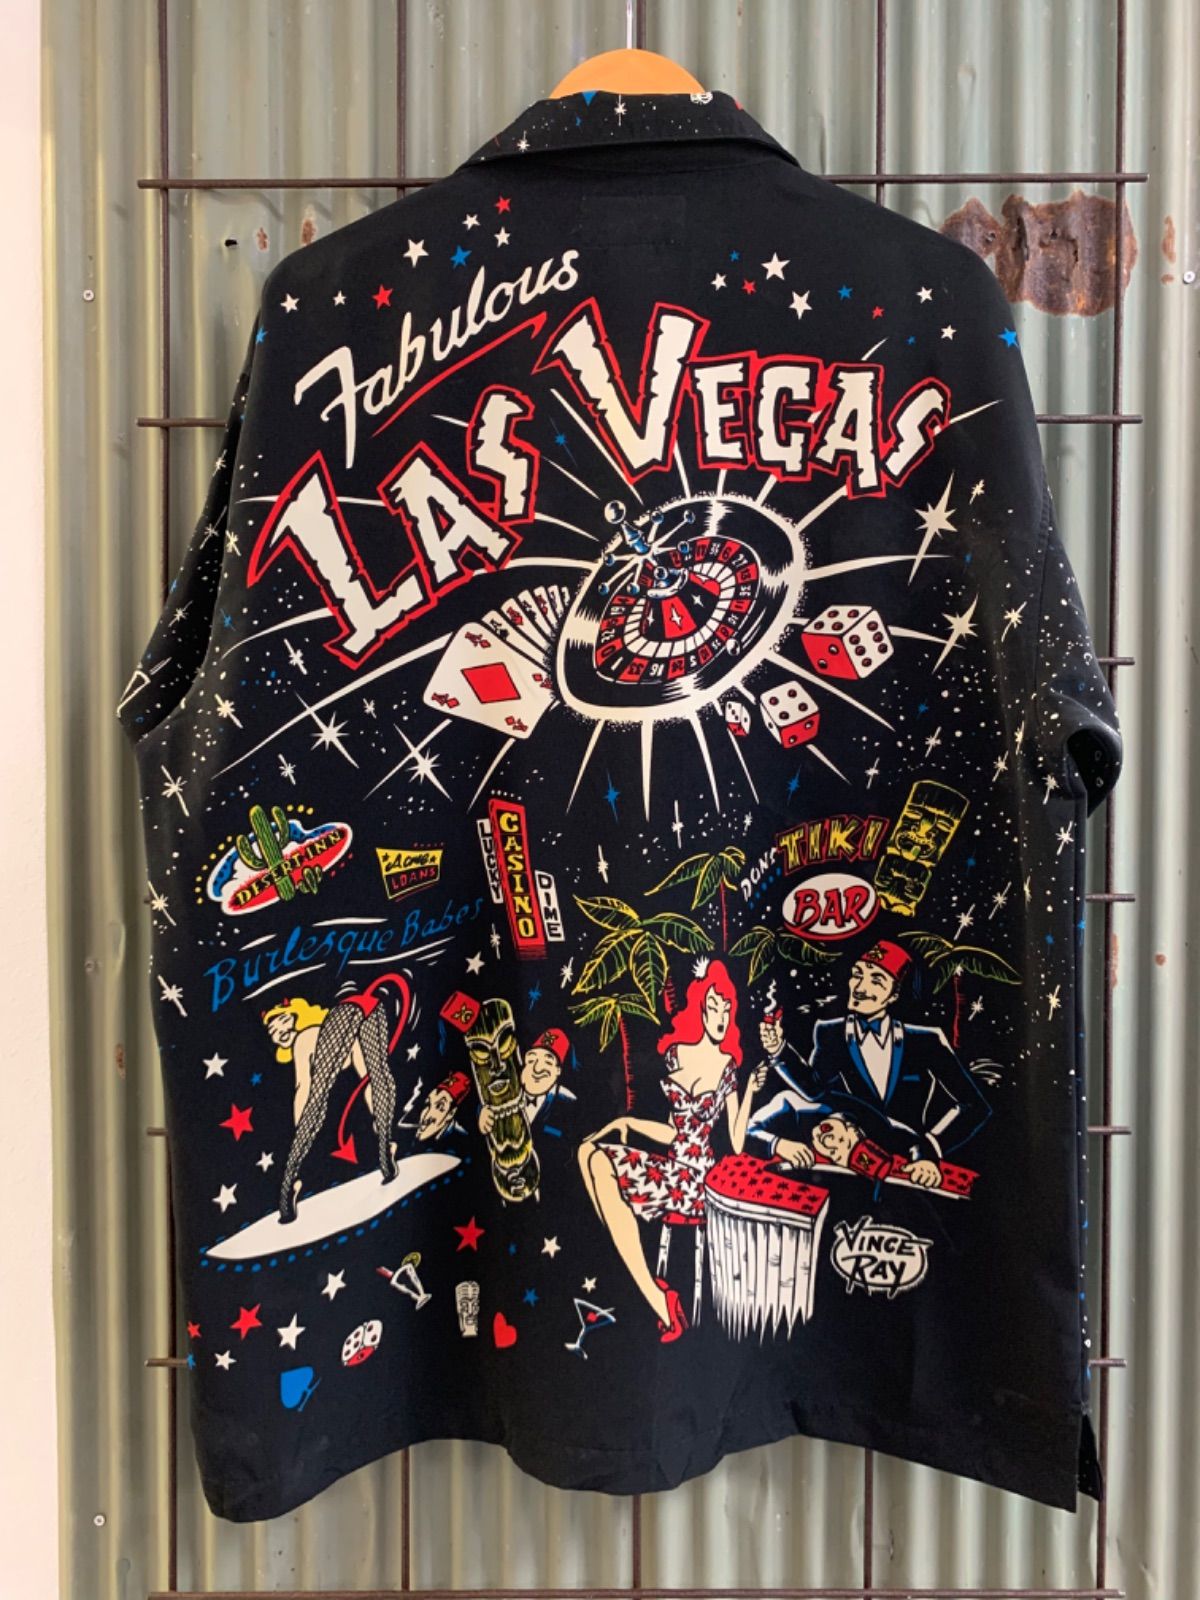 LA ROCKA BC ETHIC Las Vegas Casino Shirt - expensive Vintage